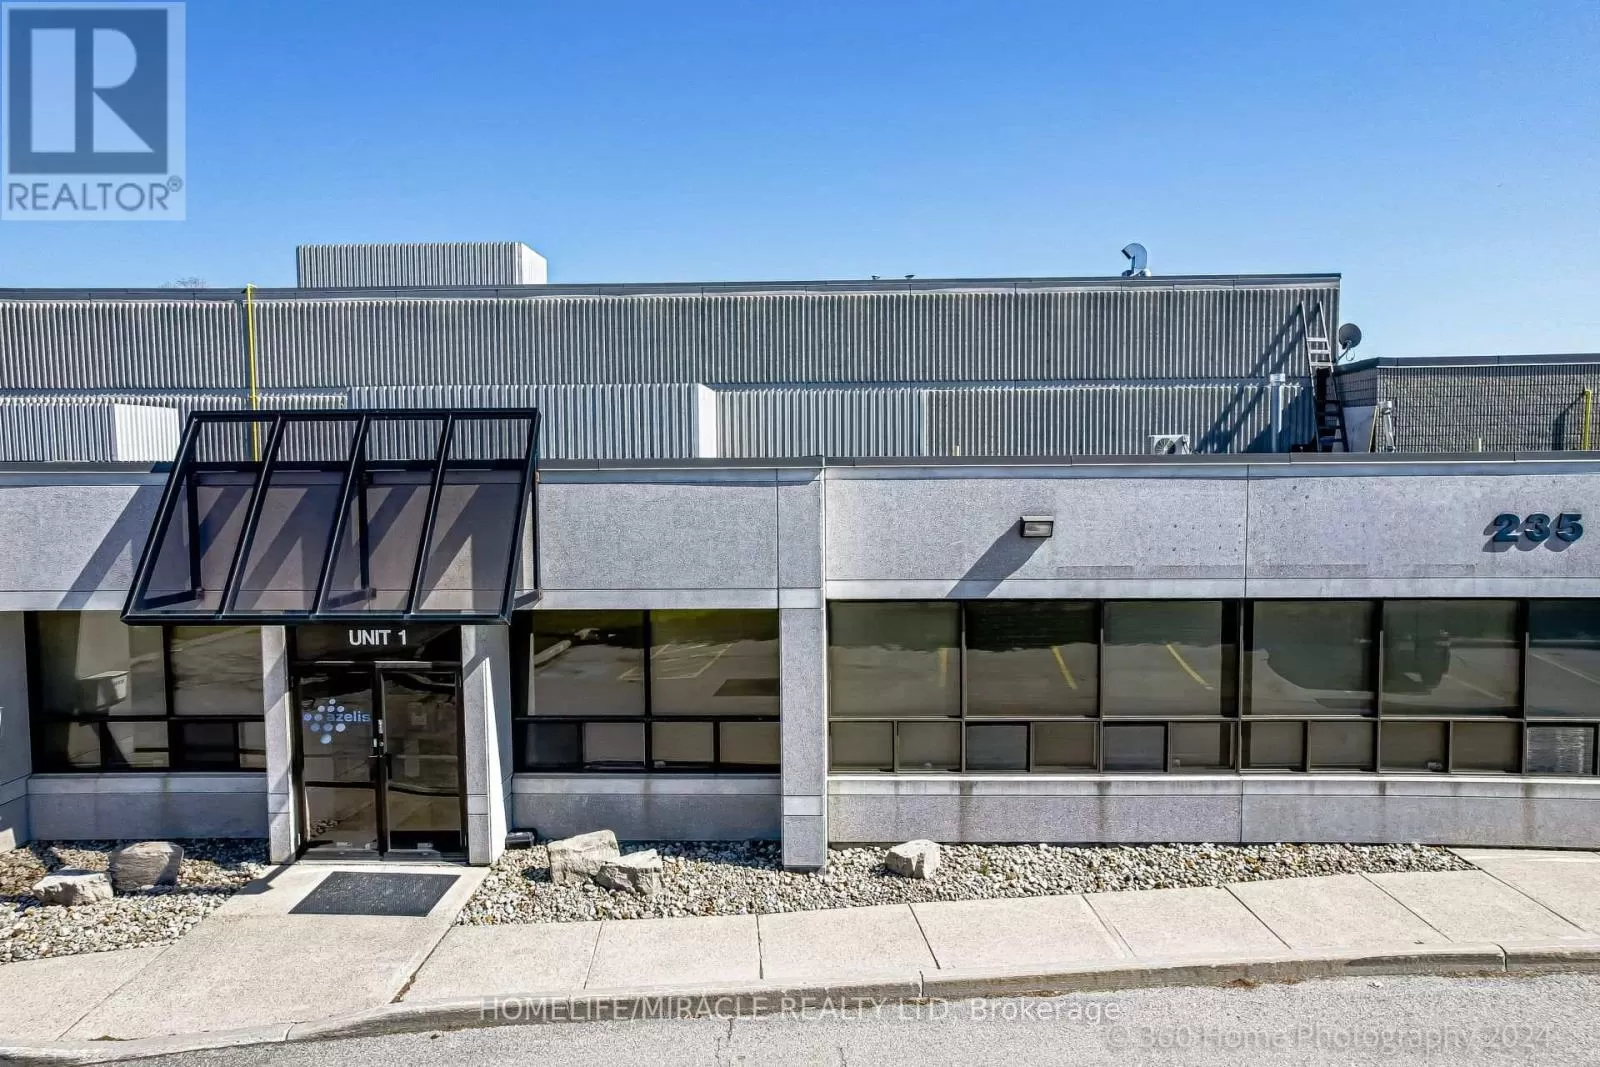 Offices for rent: 235 Advance Boulevard, Brampton, Ontario L6T 4J2